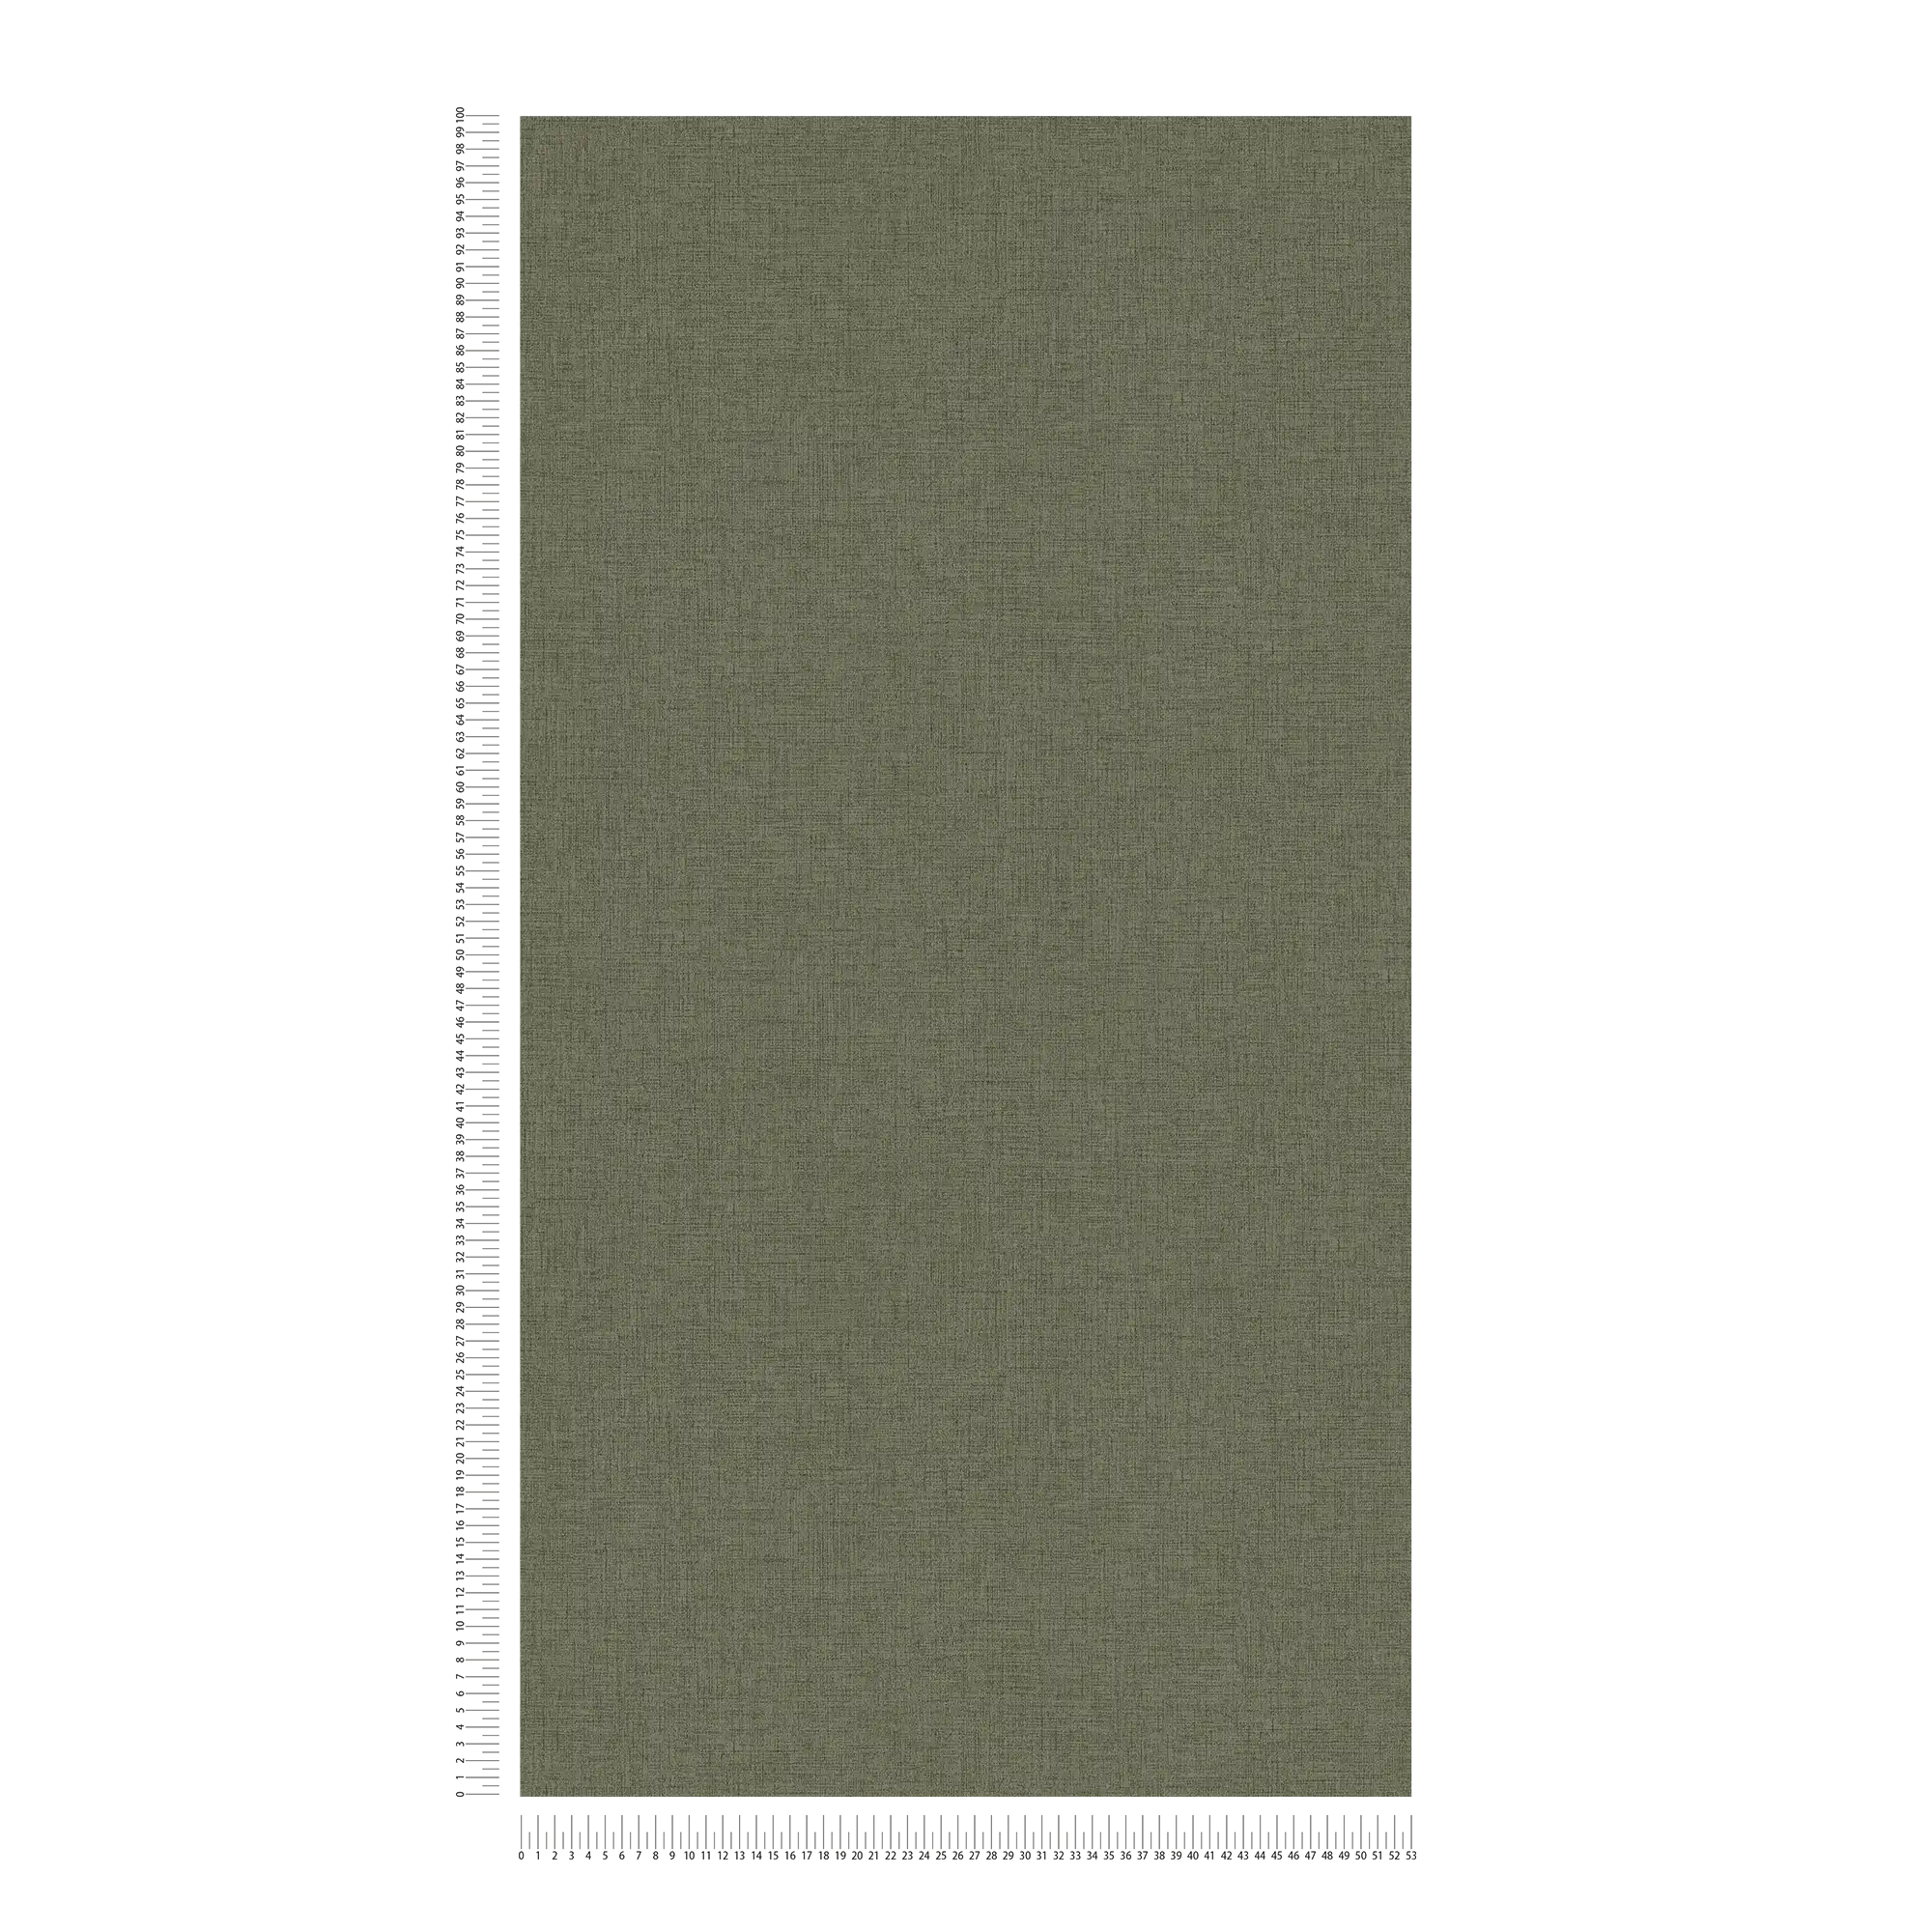             Non-woven wallpaper plain with textile look - green
        